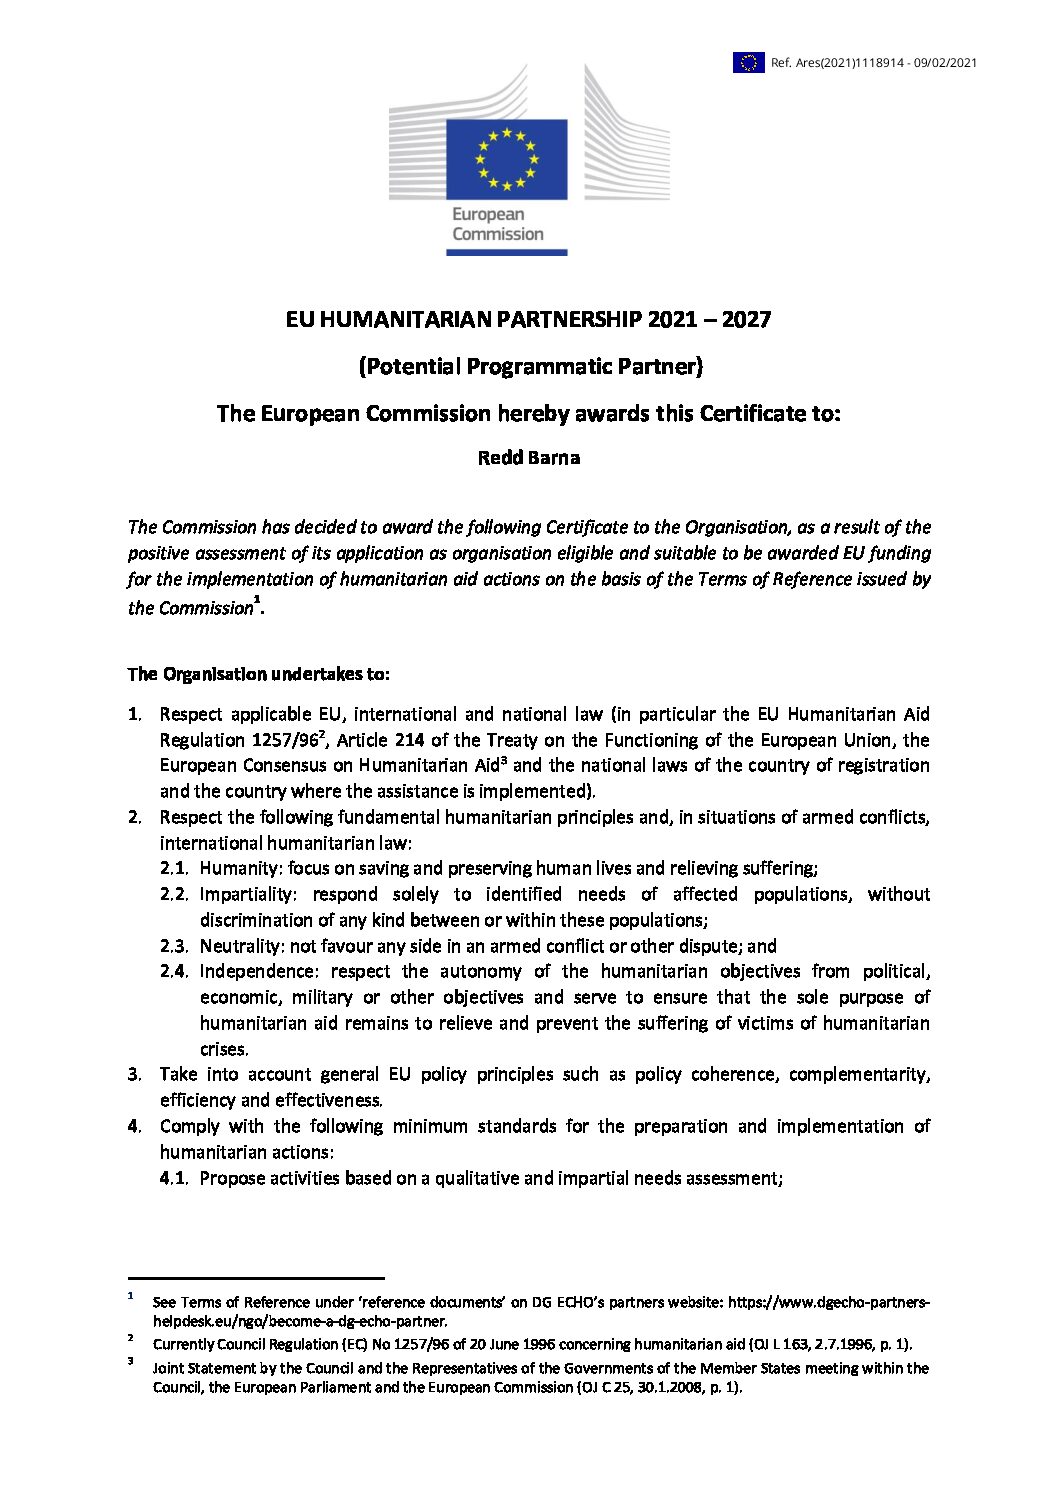 Humanitarian Partnership Certificate